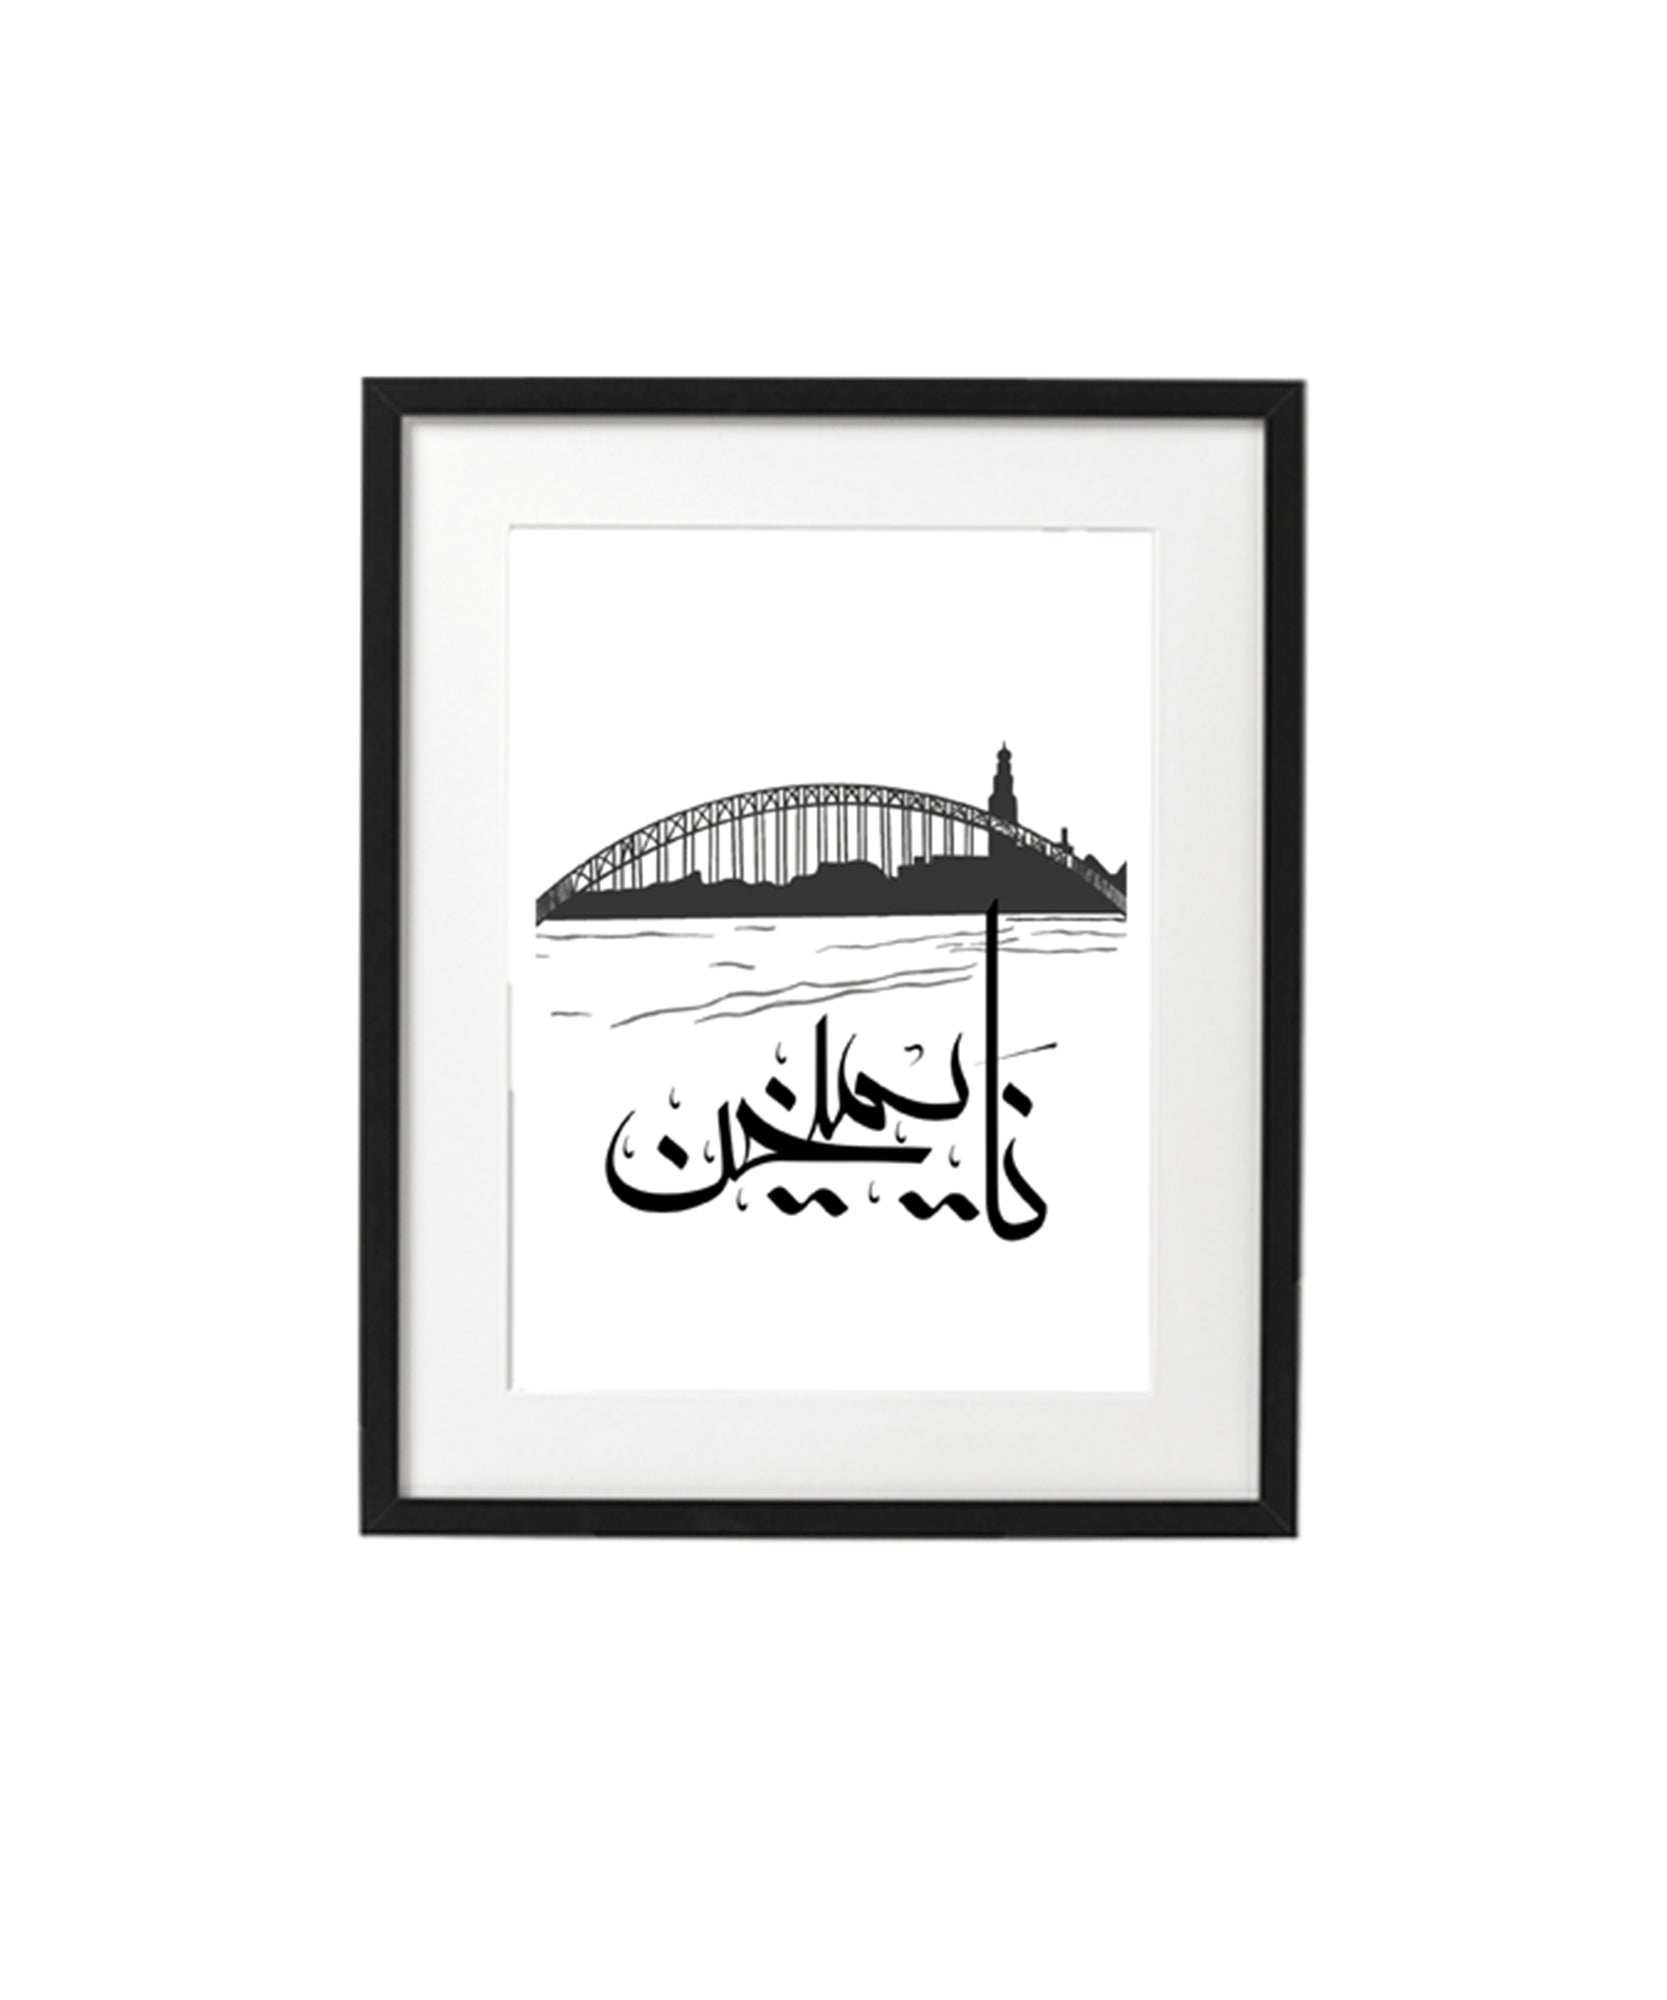 ILOVENIJMEGEN - Skyline - Kalligrafie - Sierlijk